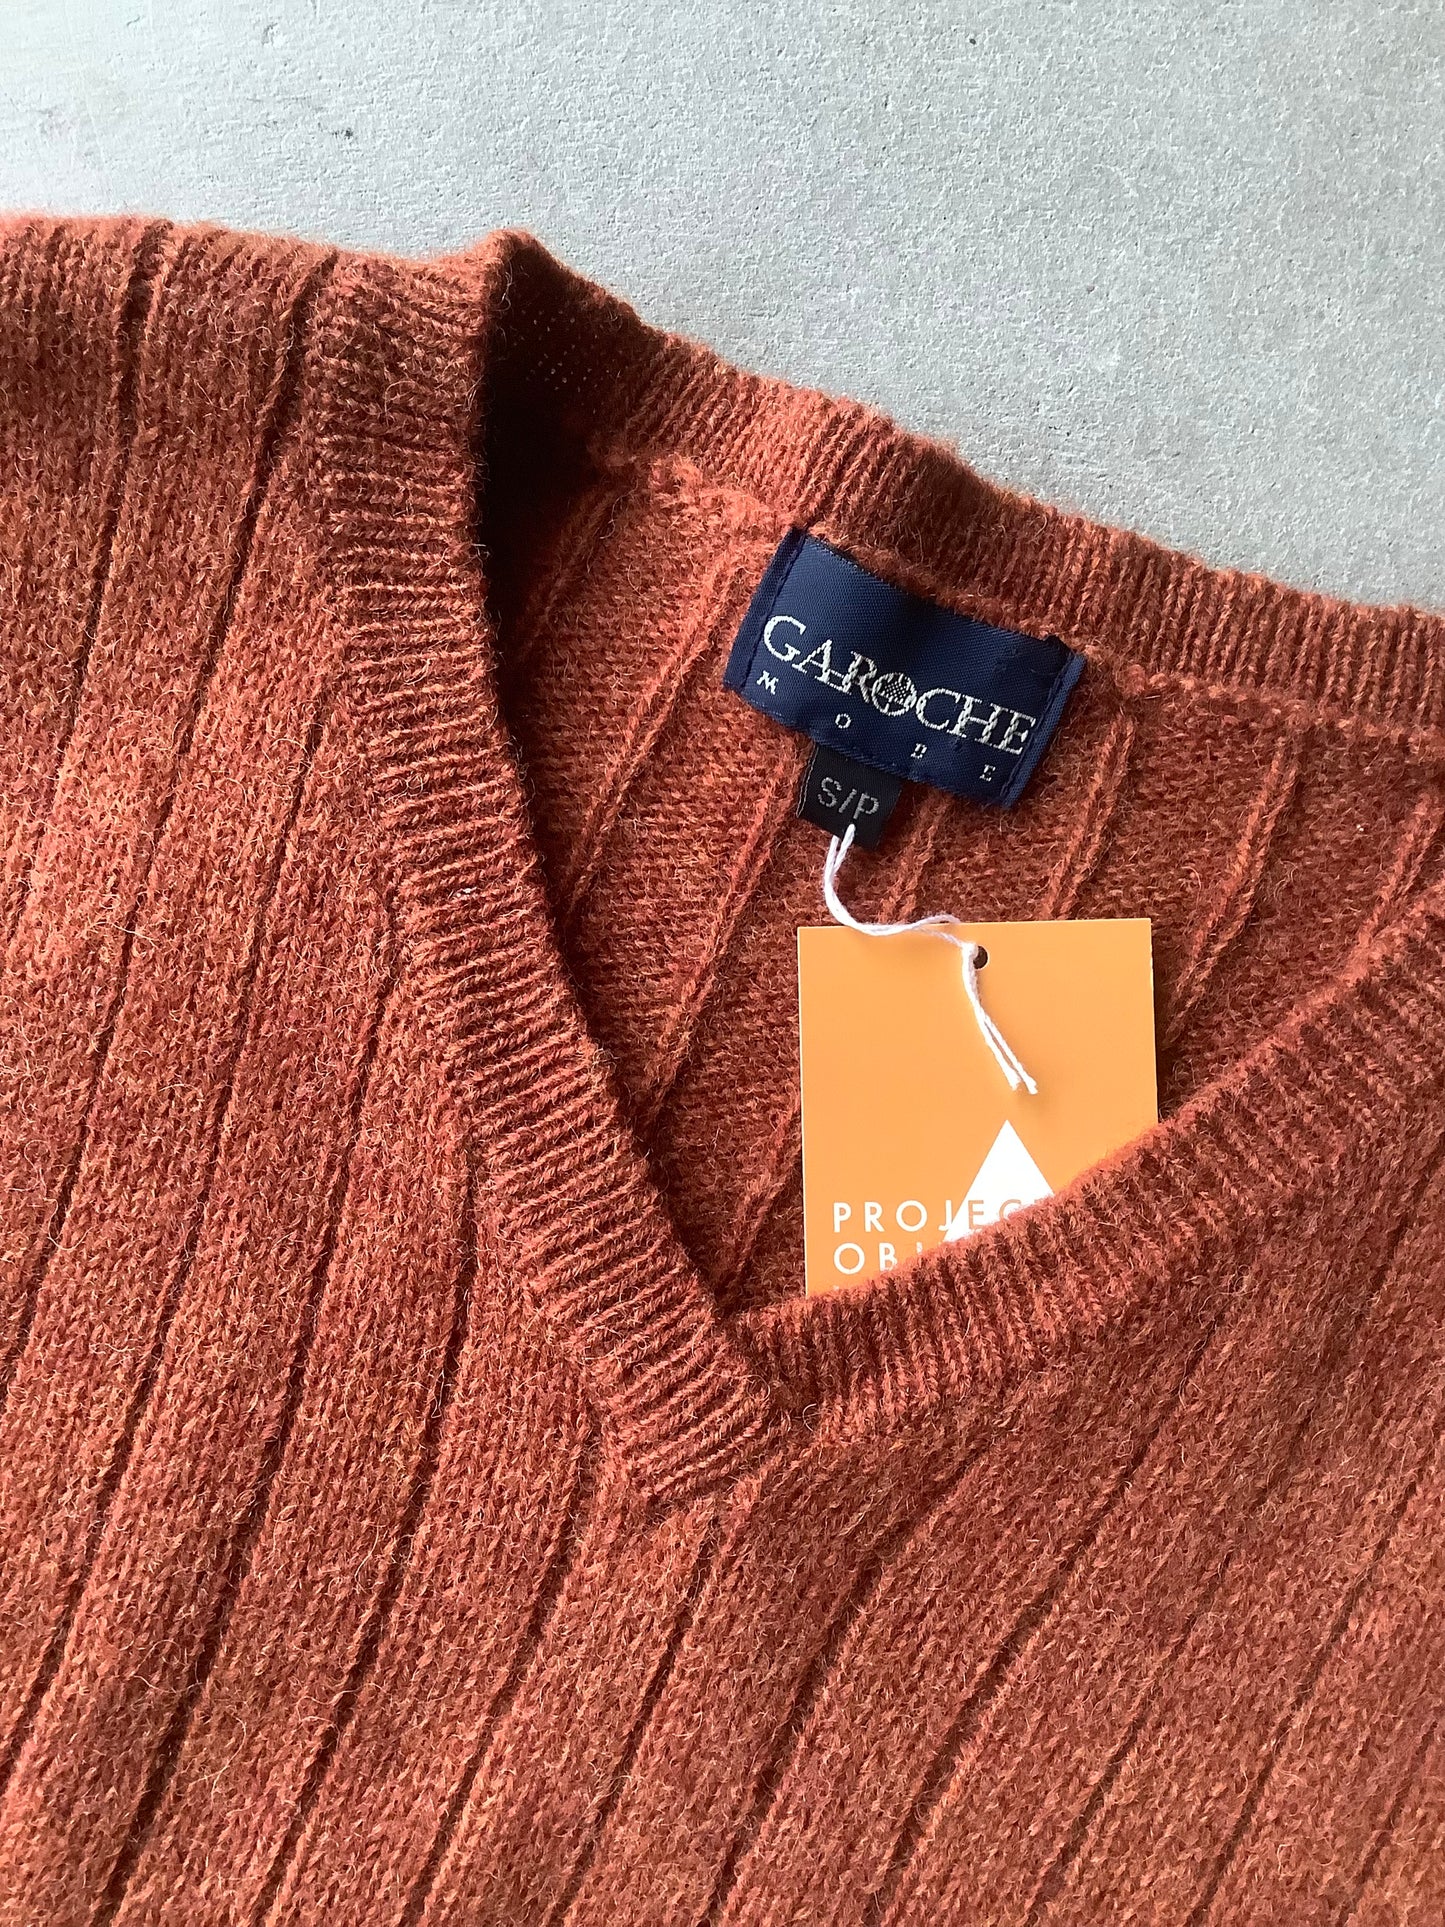 Orange wool sweater vest (S)